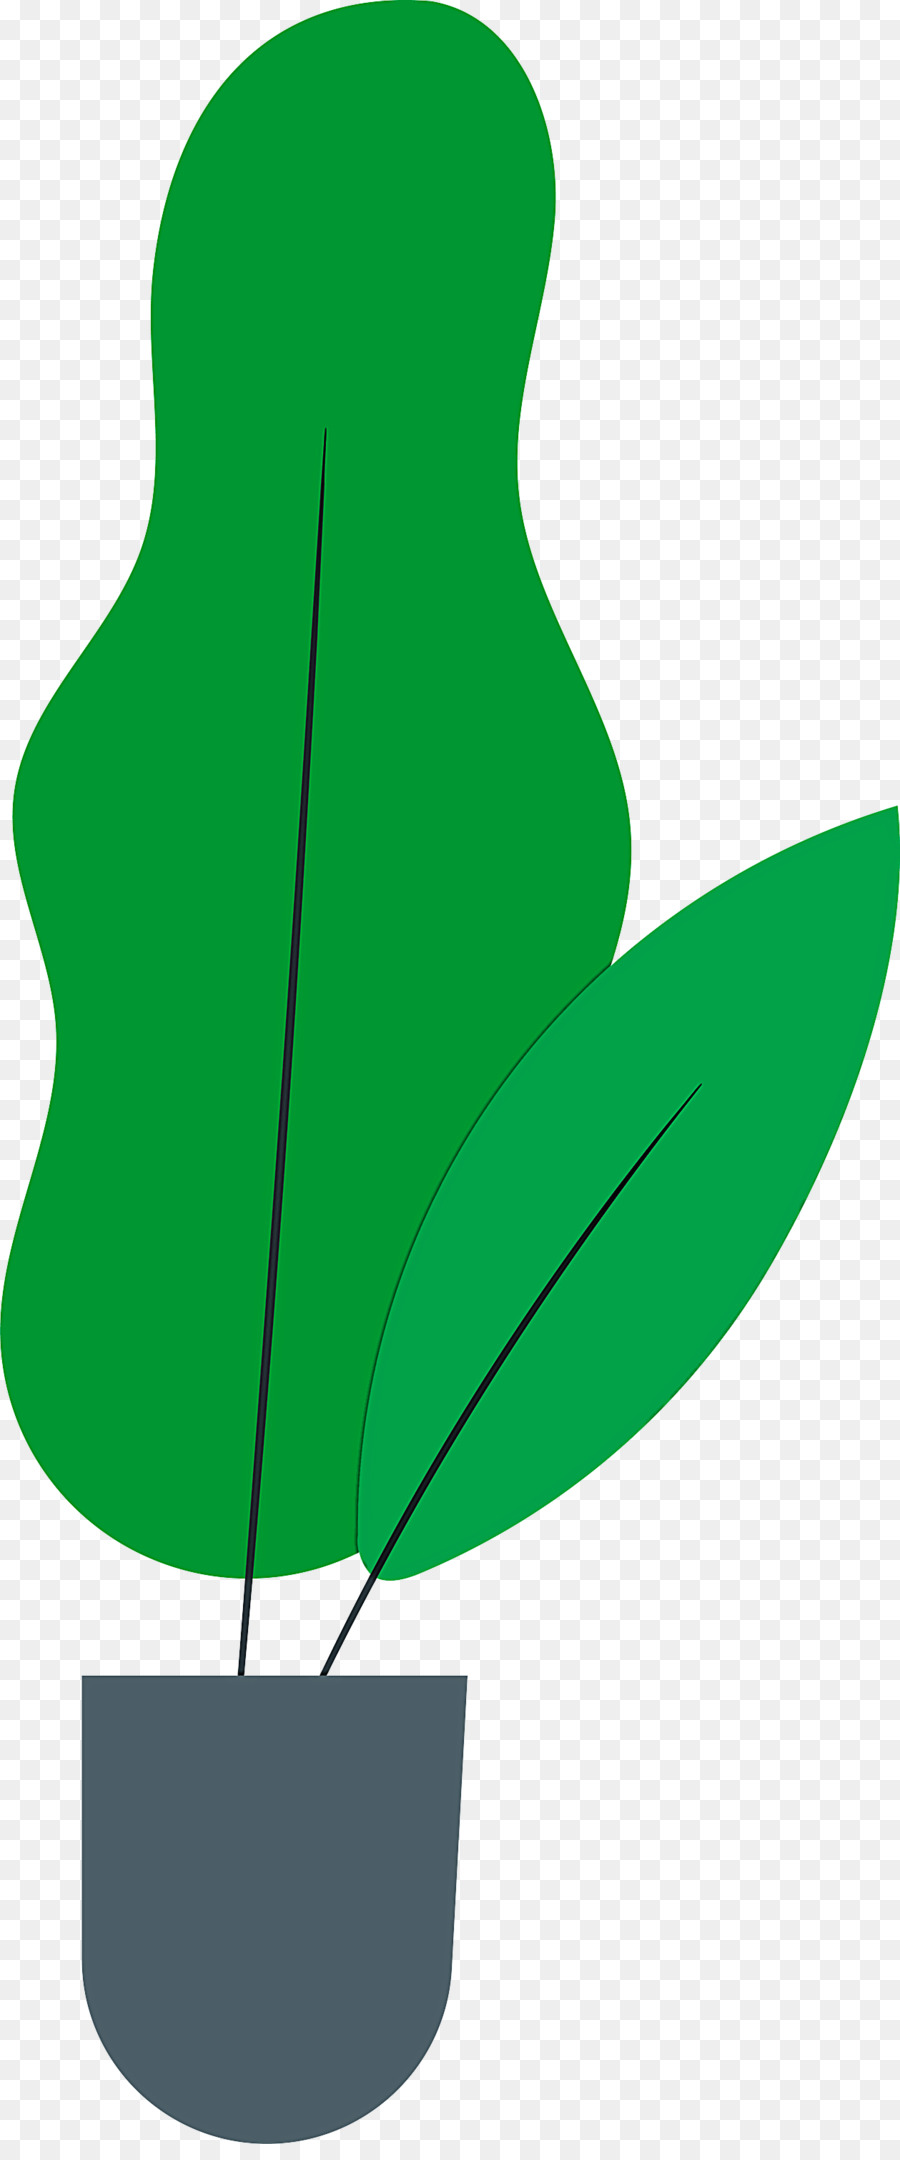 Blatt, pflanze, Stängel Blume, Zweig, Blütenblatt - 